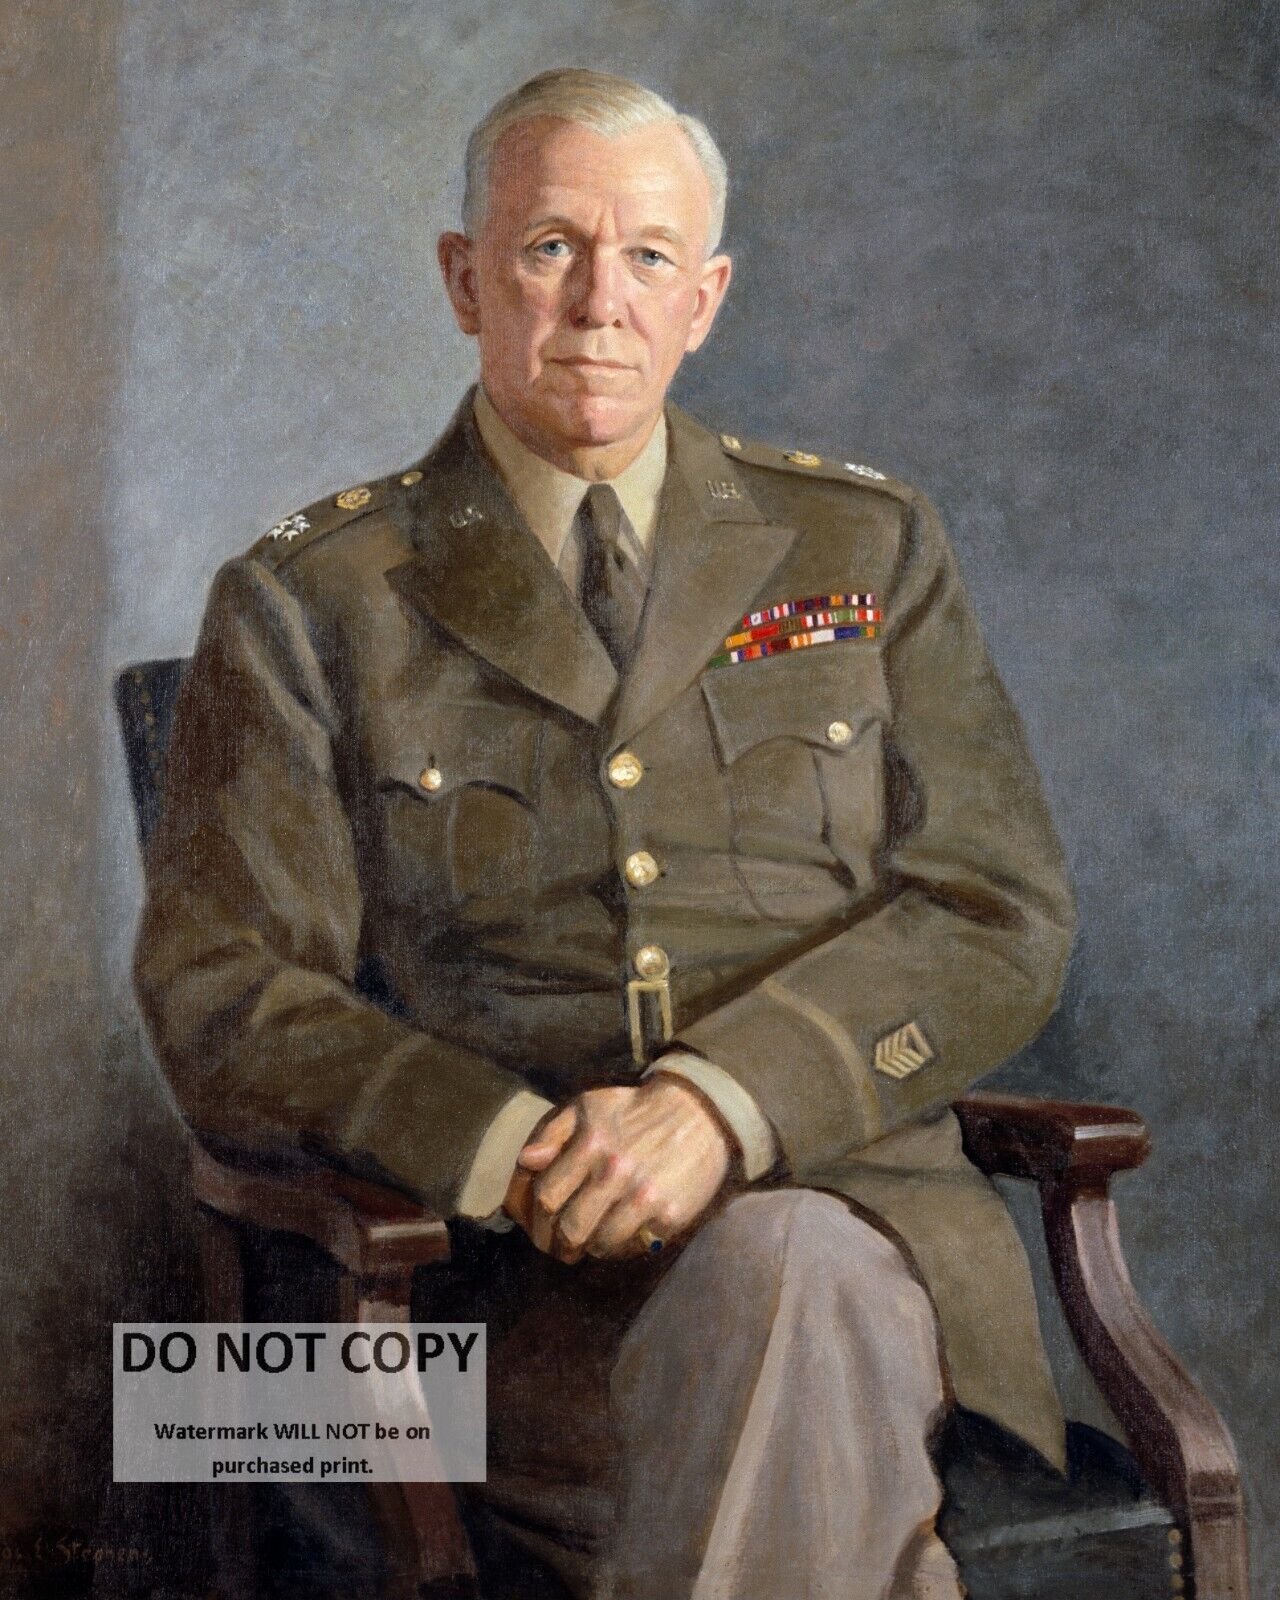 PORTRAIT OF GENERAL GEORGE C. MARSHALL - 8X10 REPRINT PHOTO (MW735)